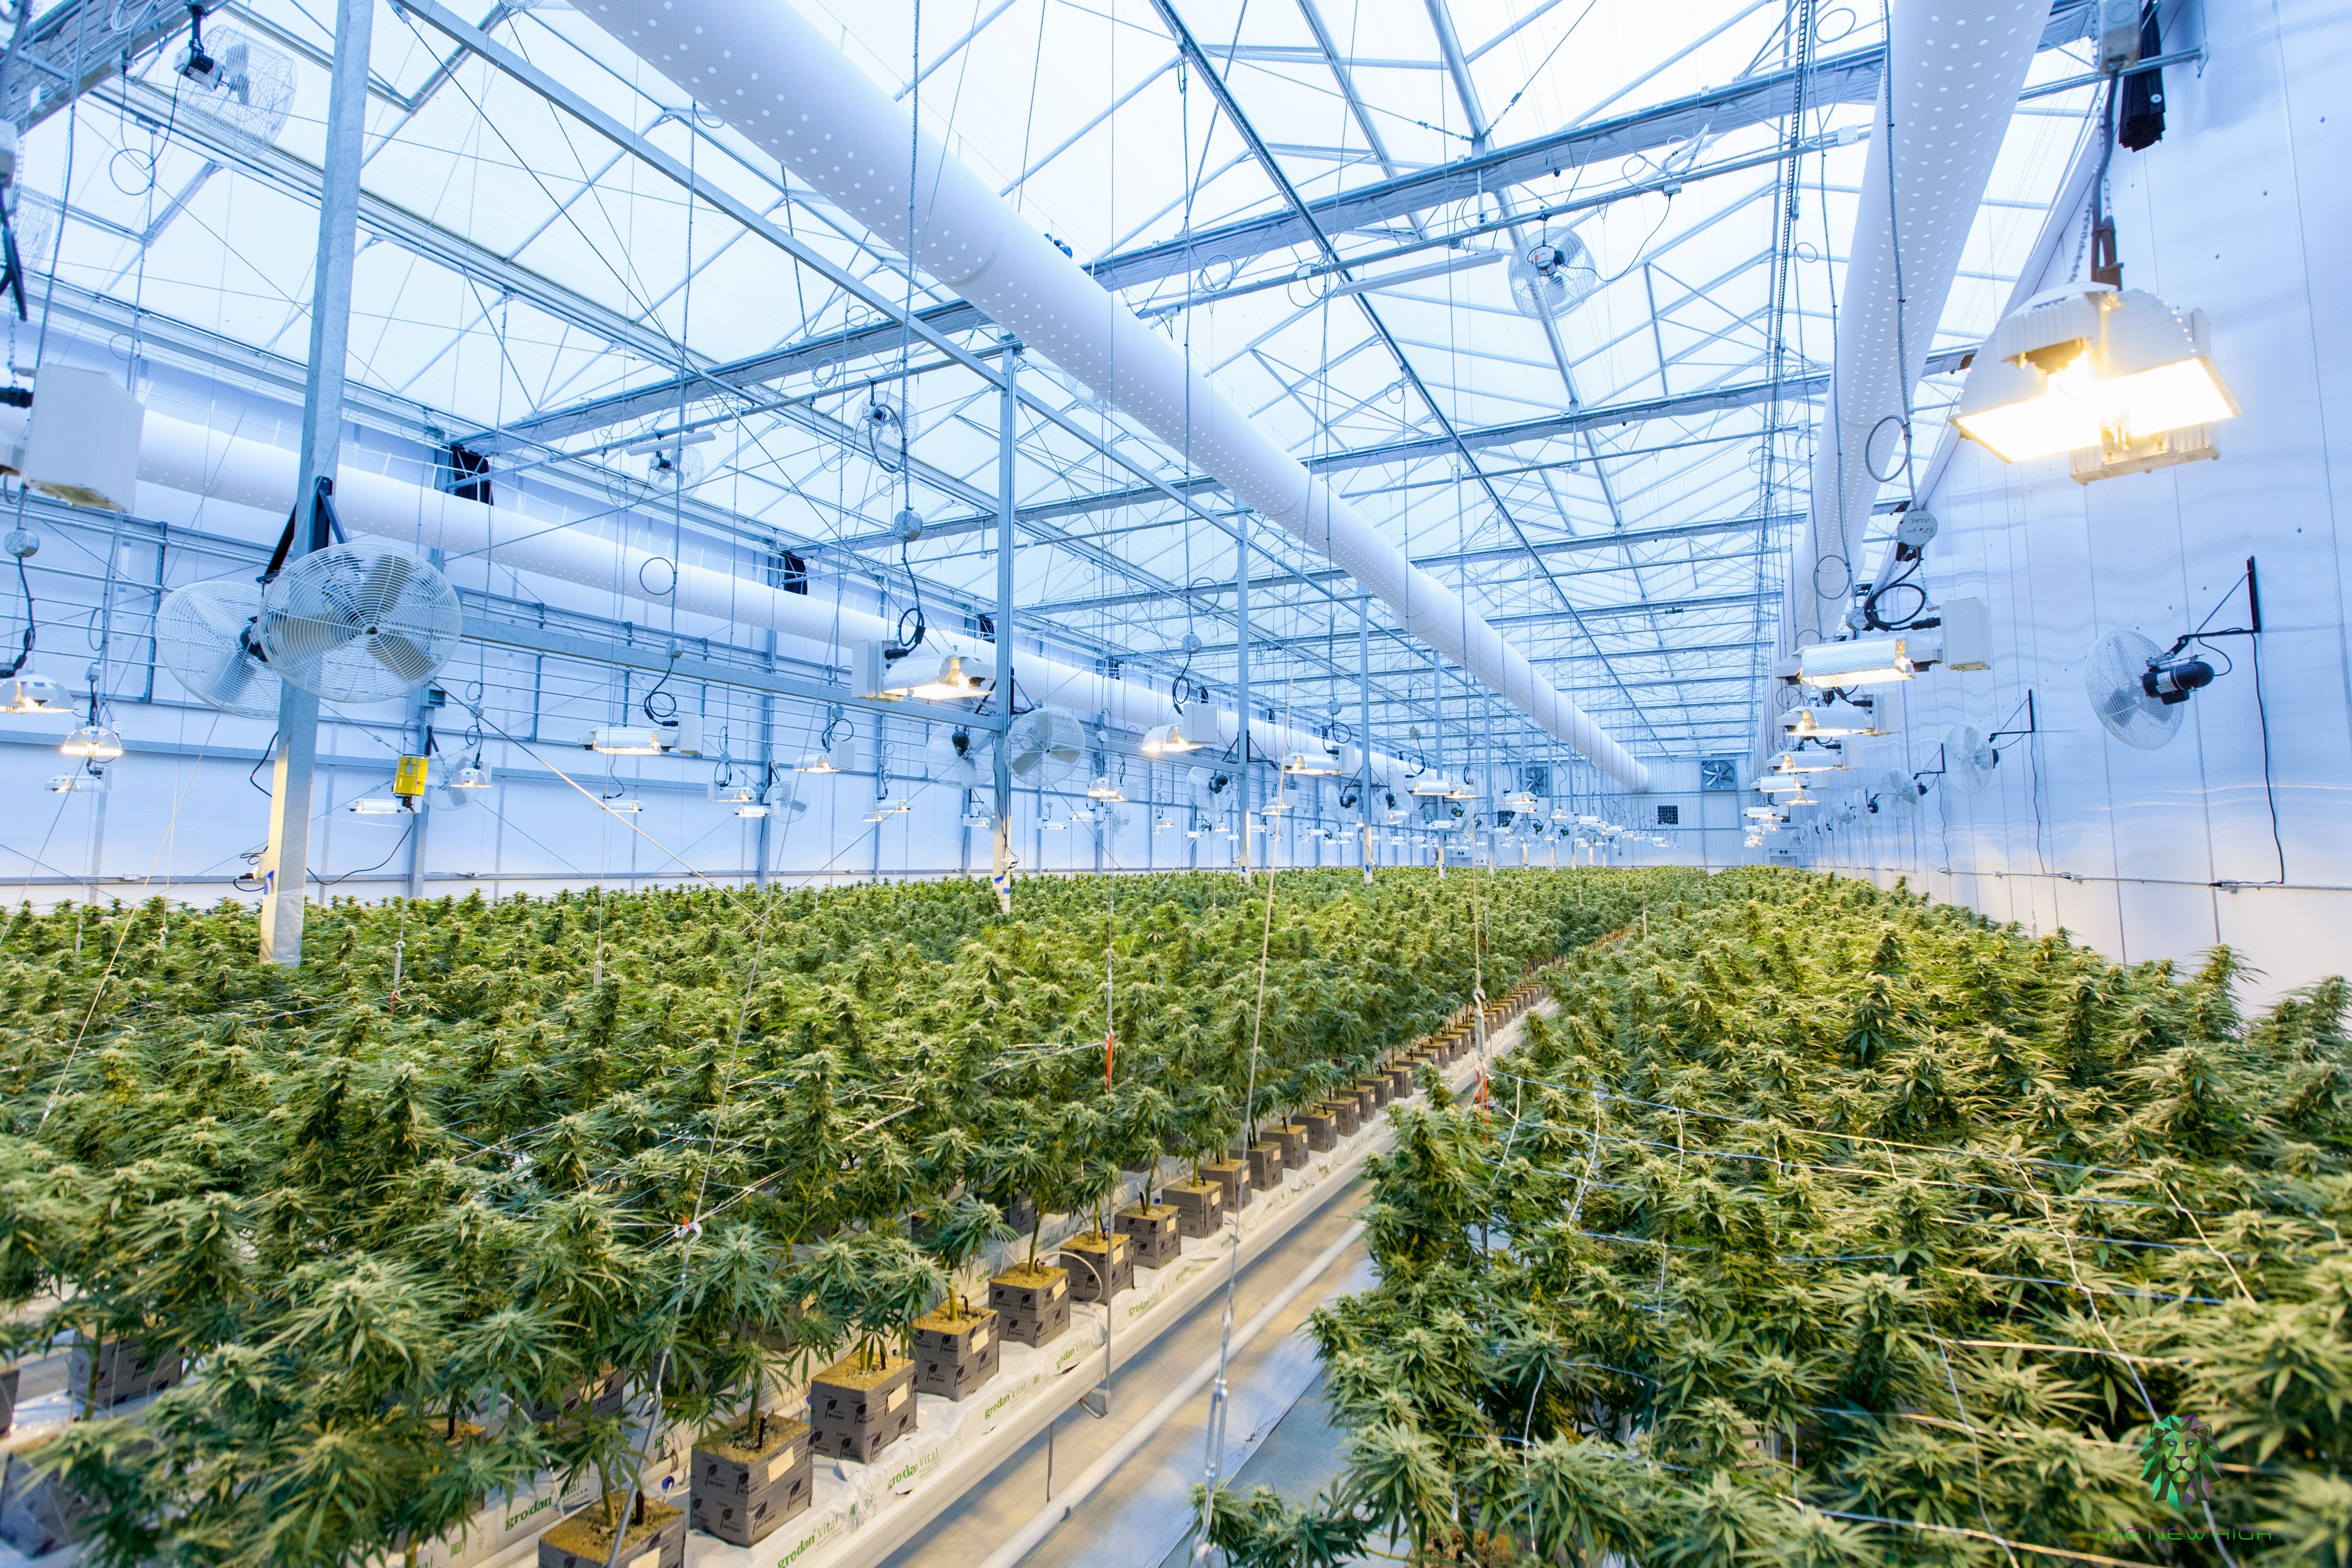 Bright Green Releases Financial Update, First Cannabis Harvest & DEA Inspection Still Pending